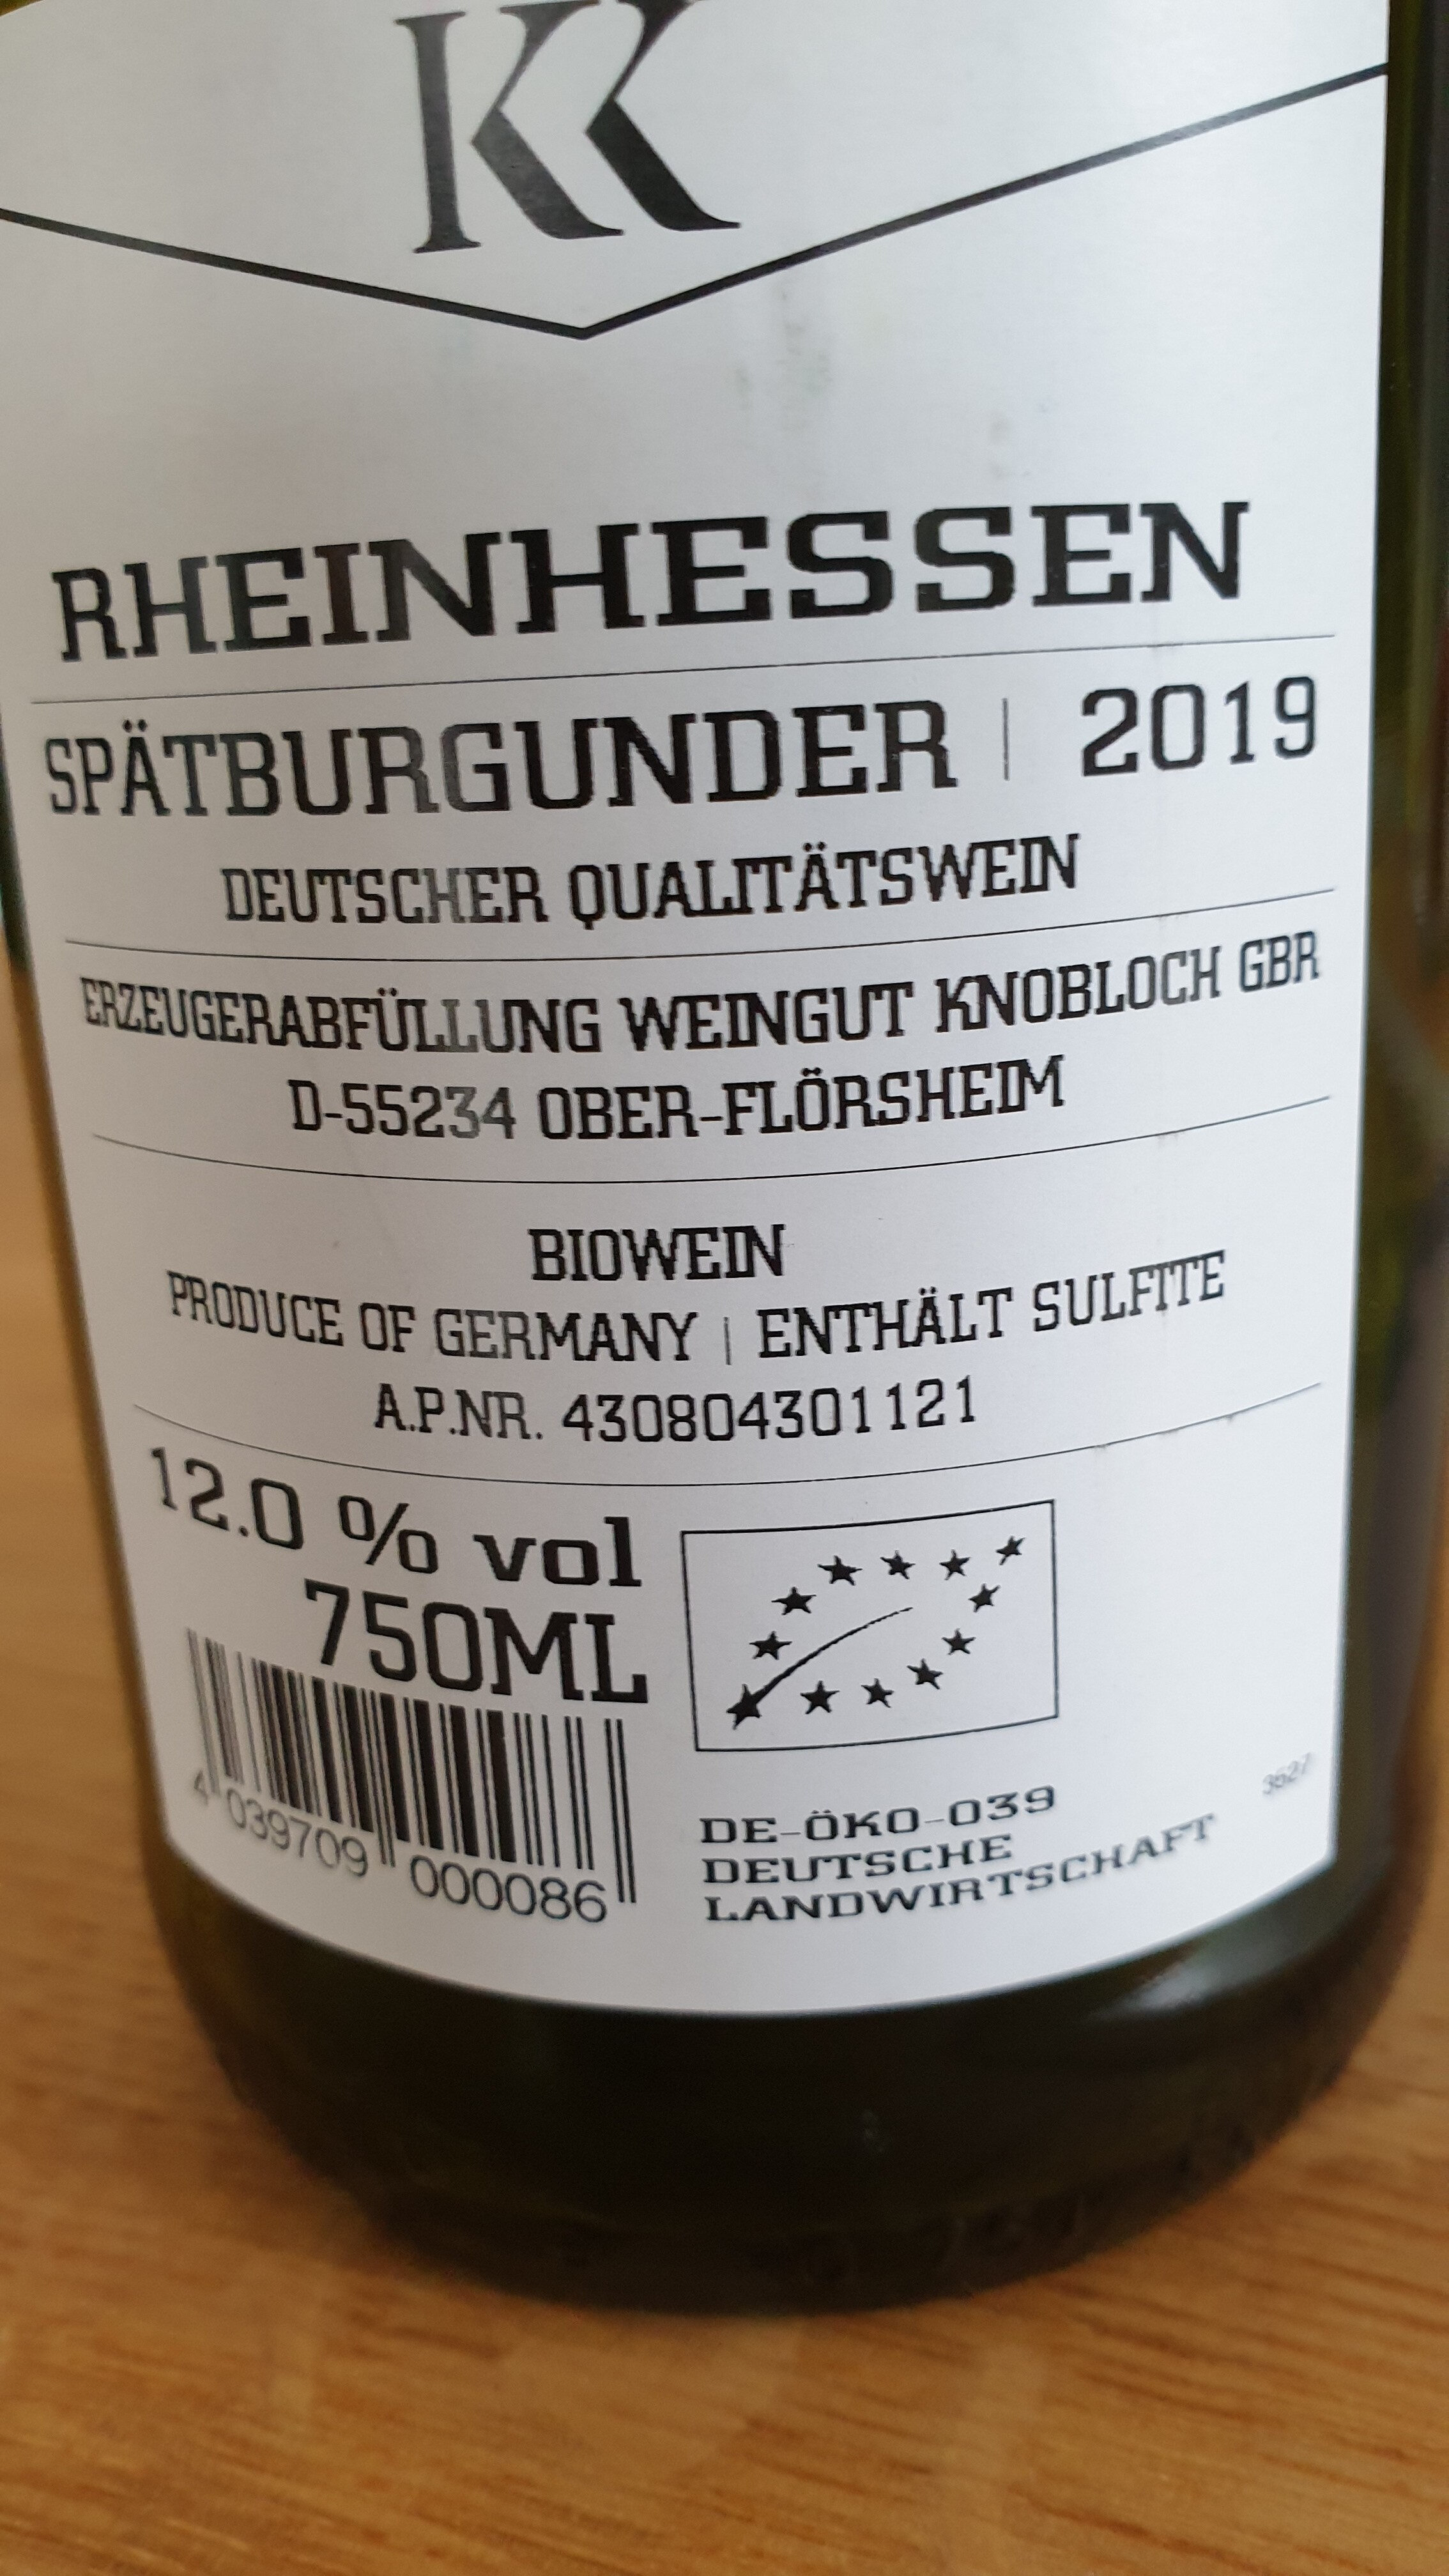 Spätburgunder 2019 - Ingredients - de